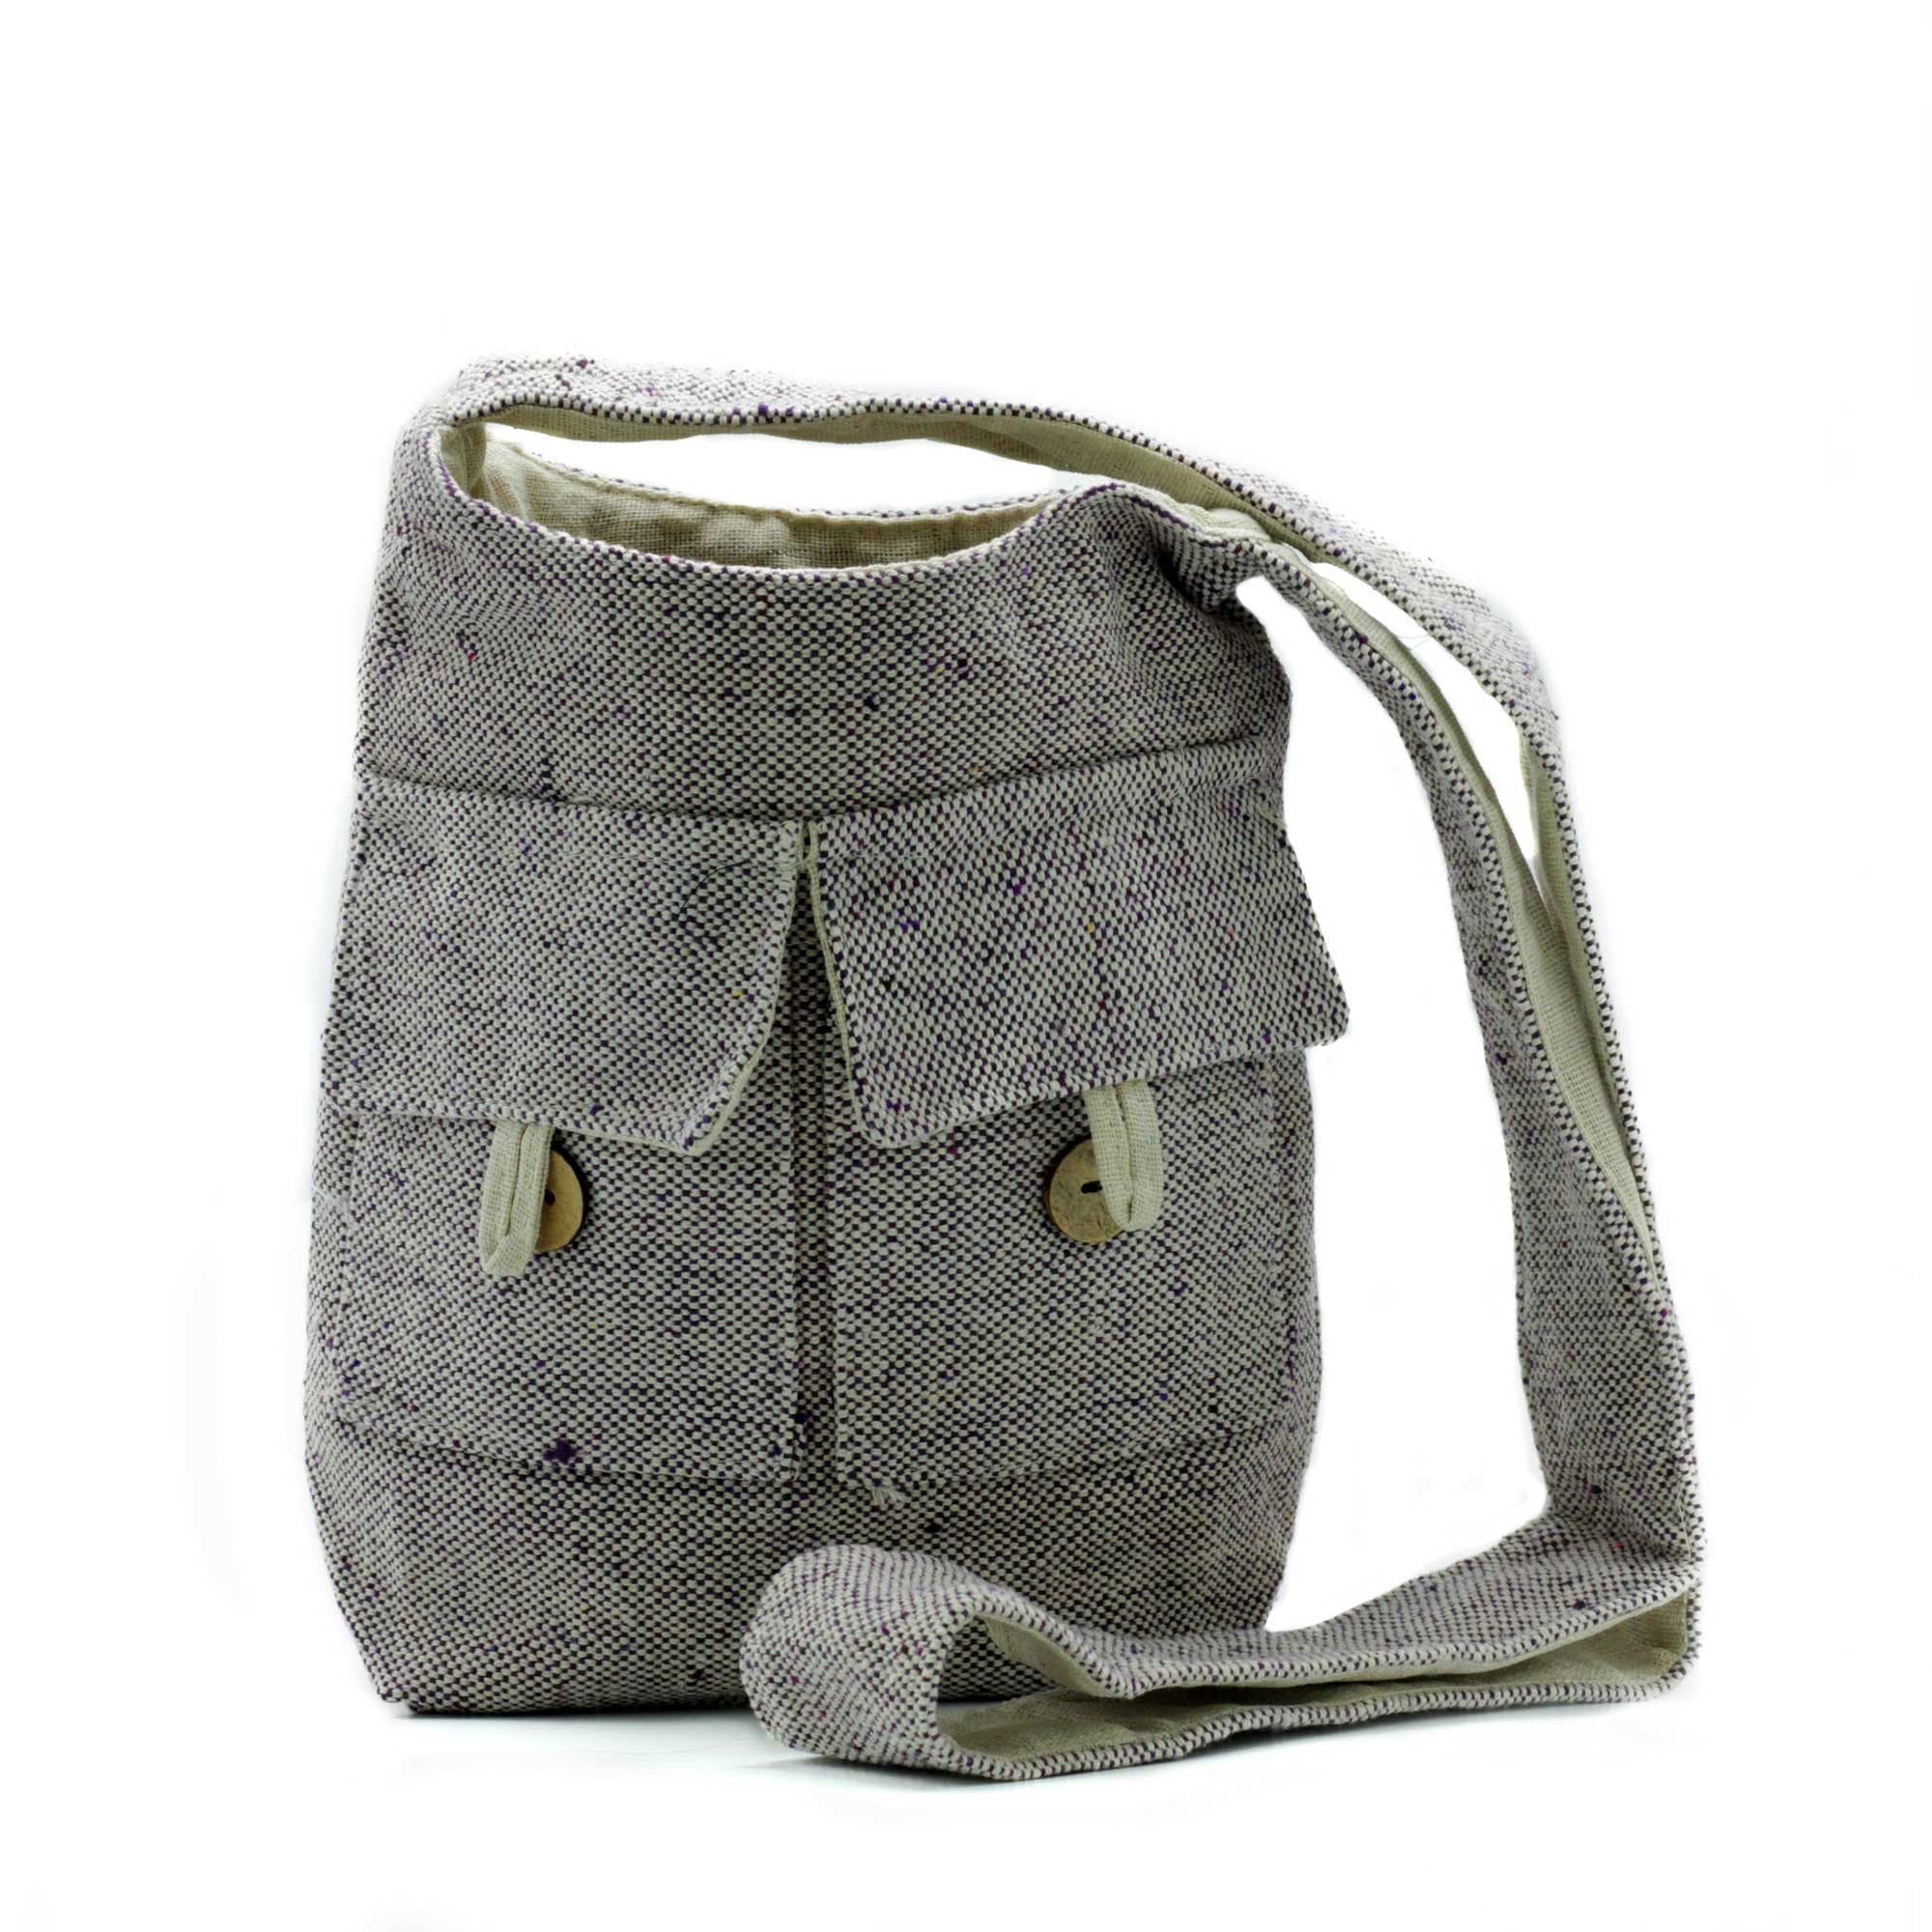 View Natural Tones Two Pocket Bags Soft Lavender Medium information